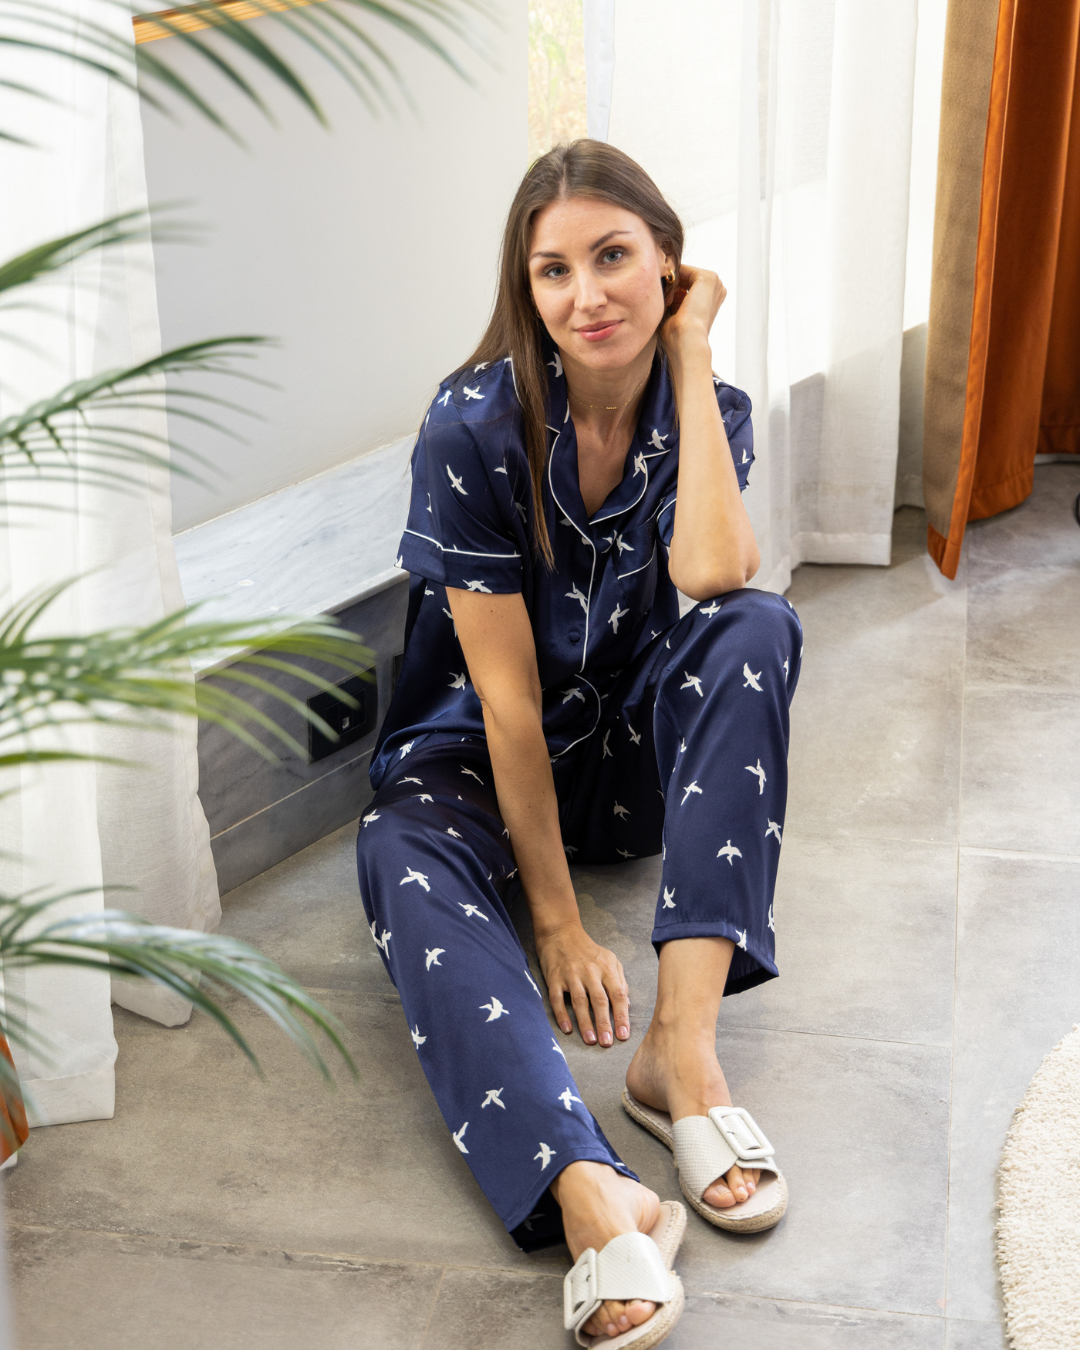 Classic women's pajamas, half sleeves, with bird print